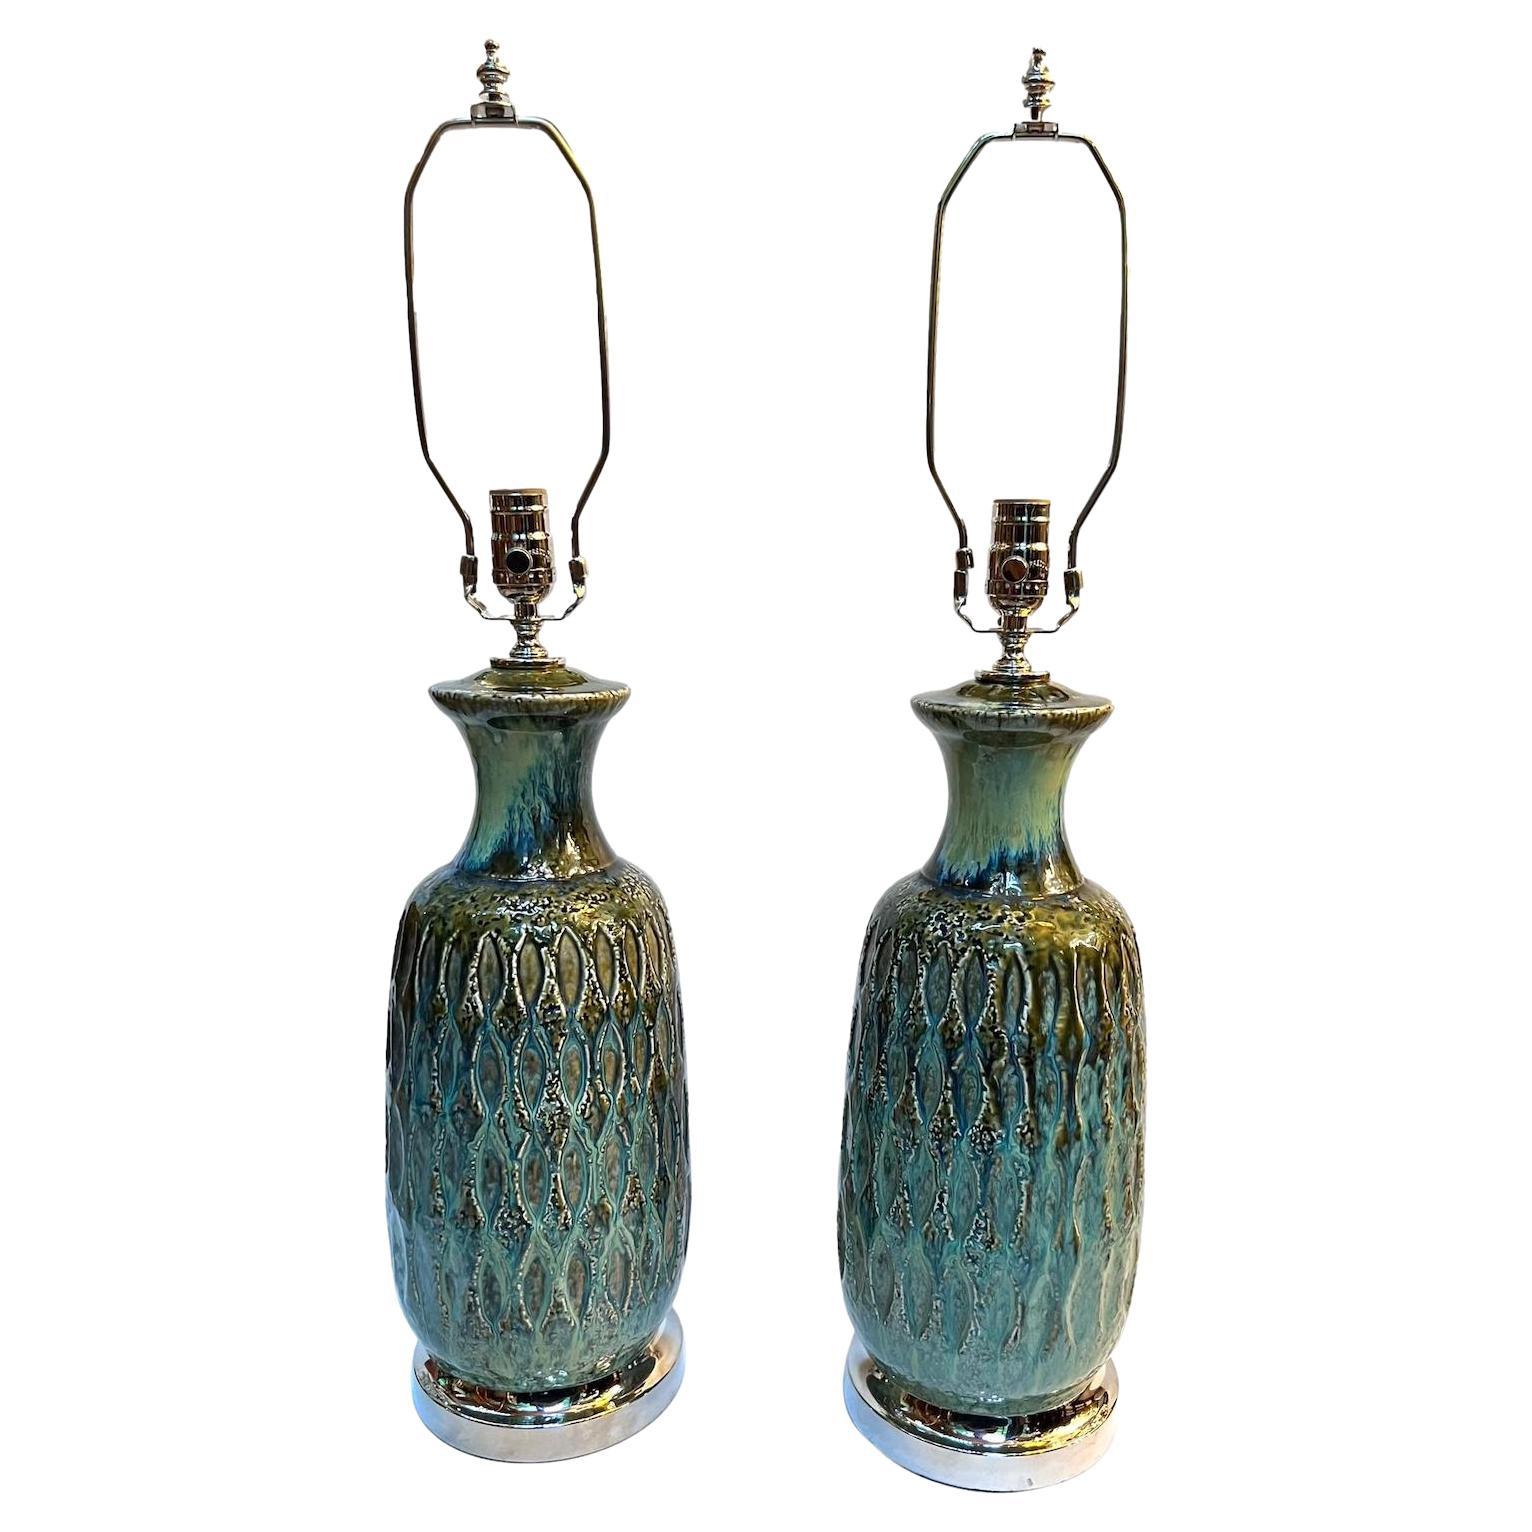 Pair of Italian Midcentury Porcelain Lamps